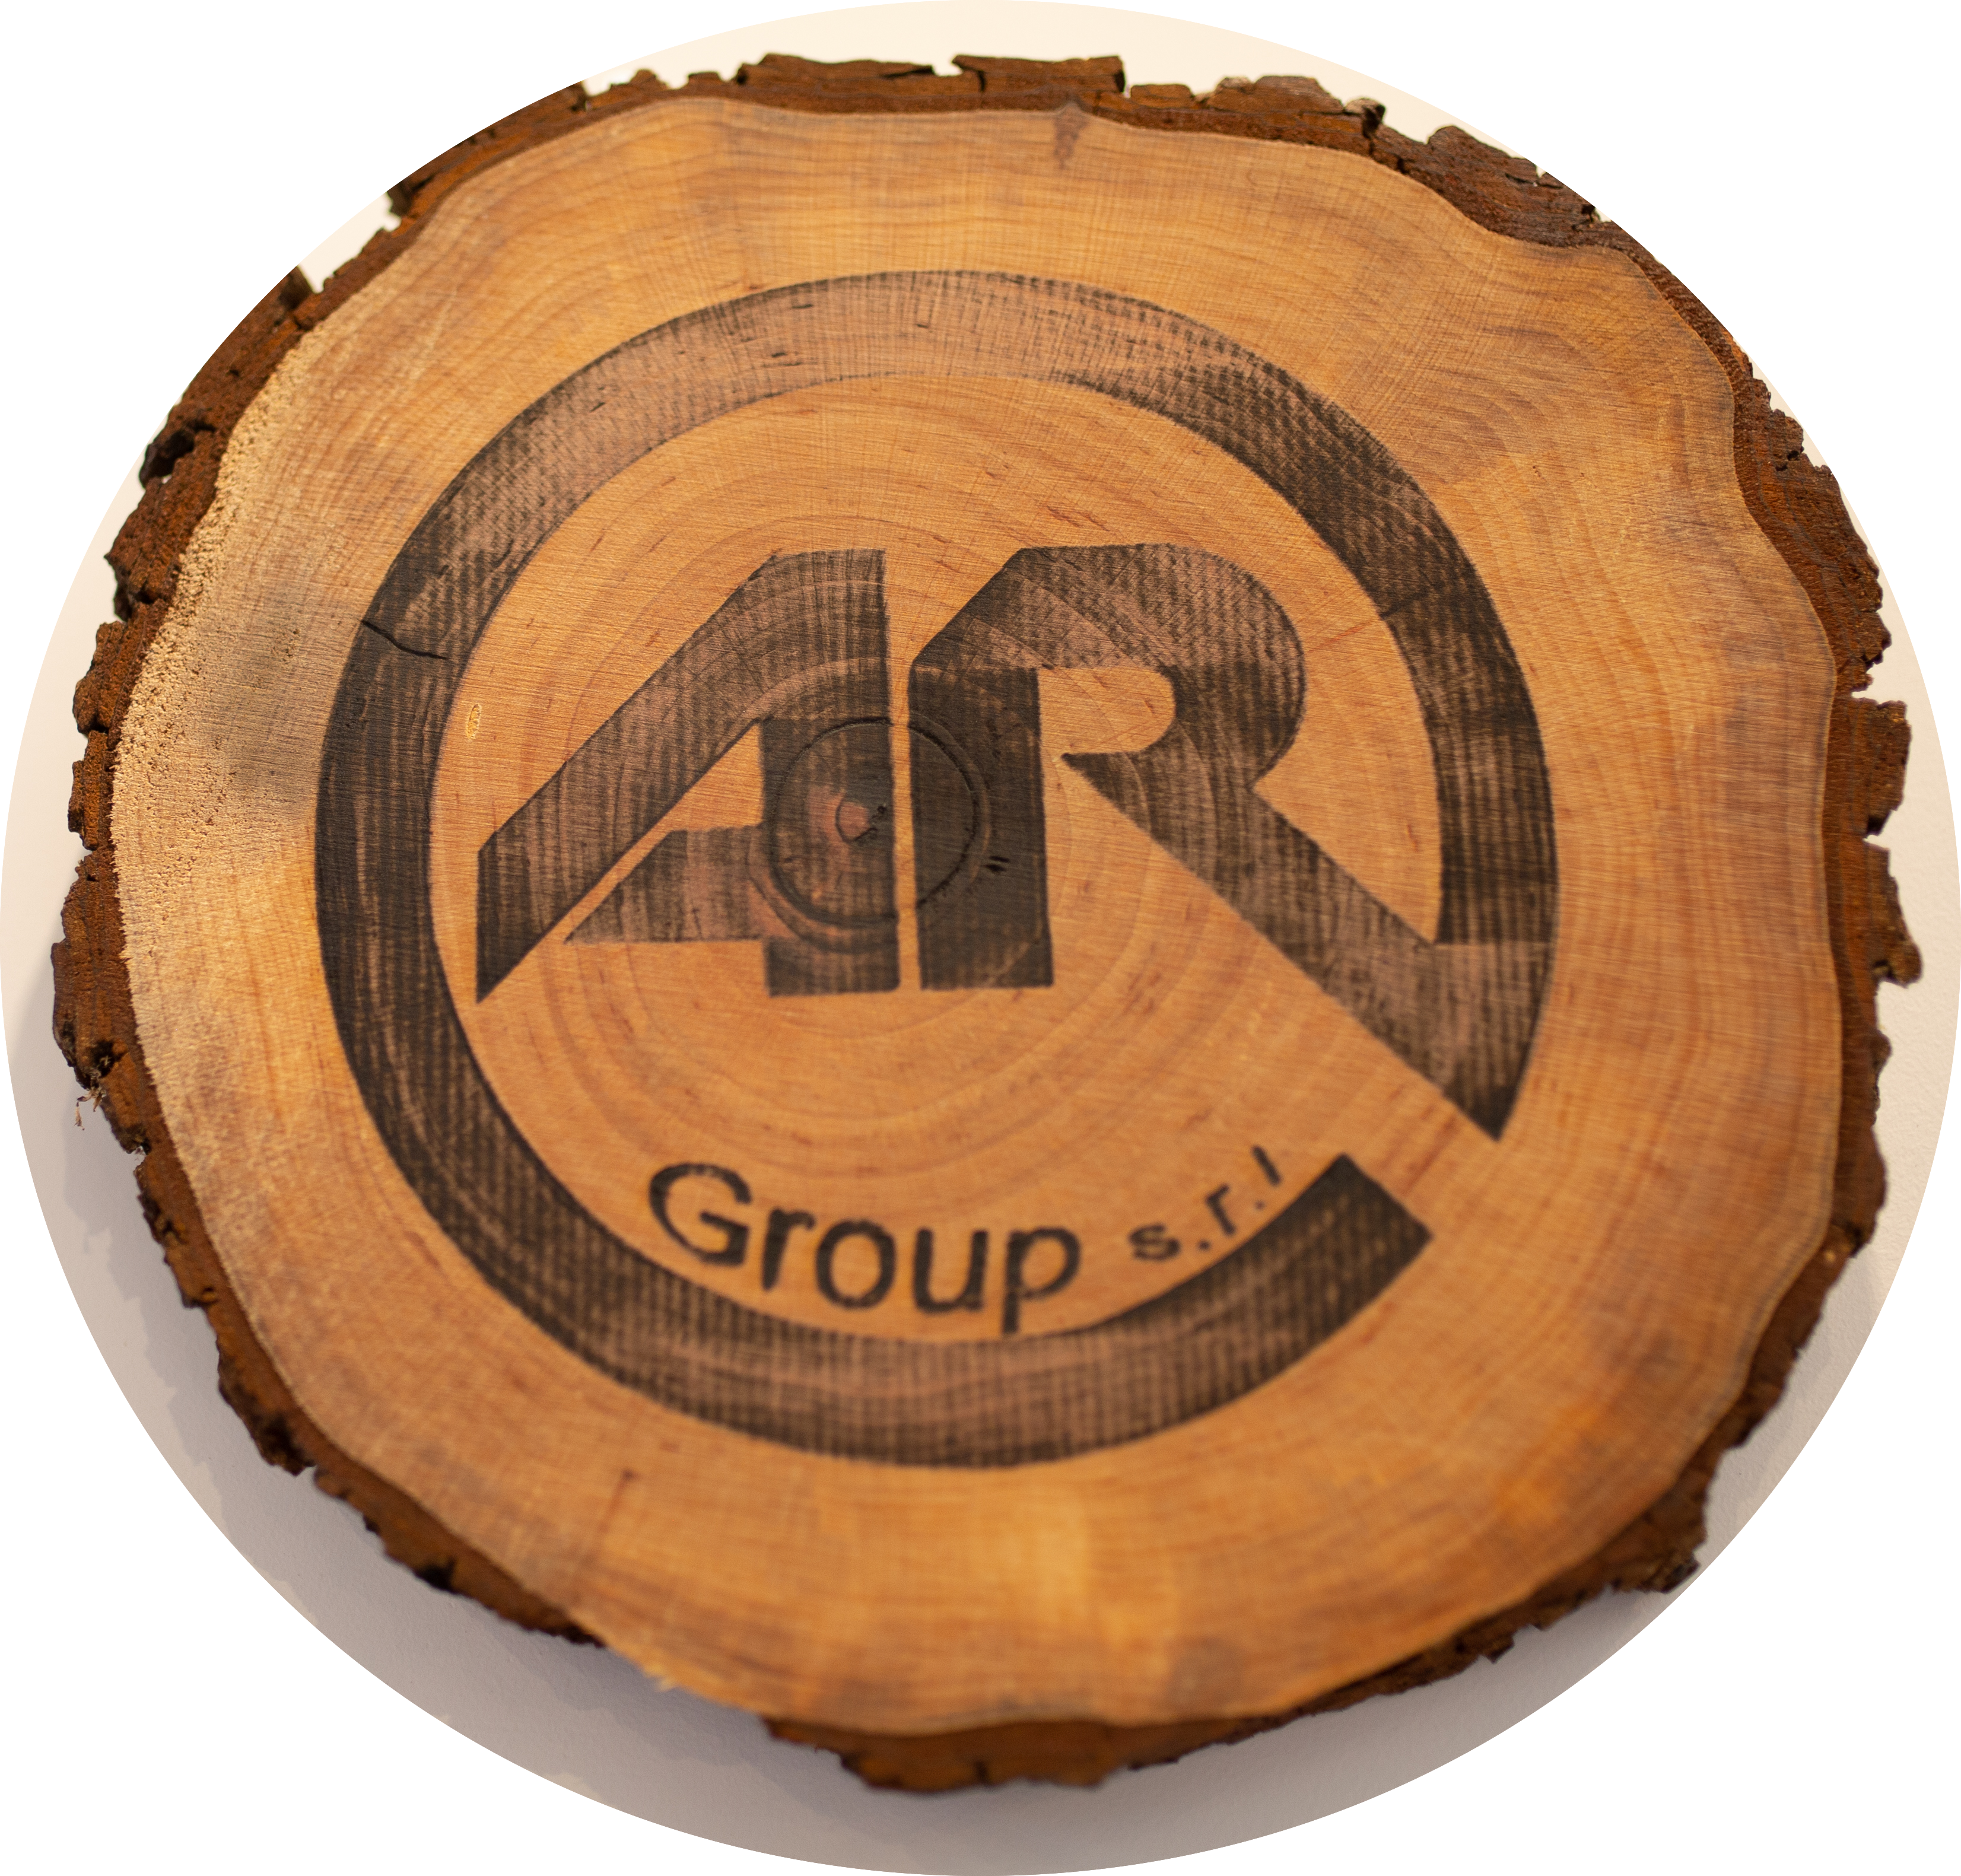 A. r group s.r.l.